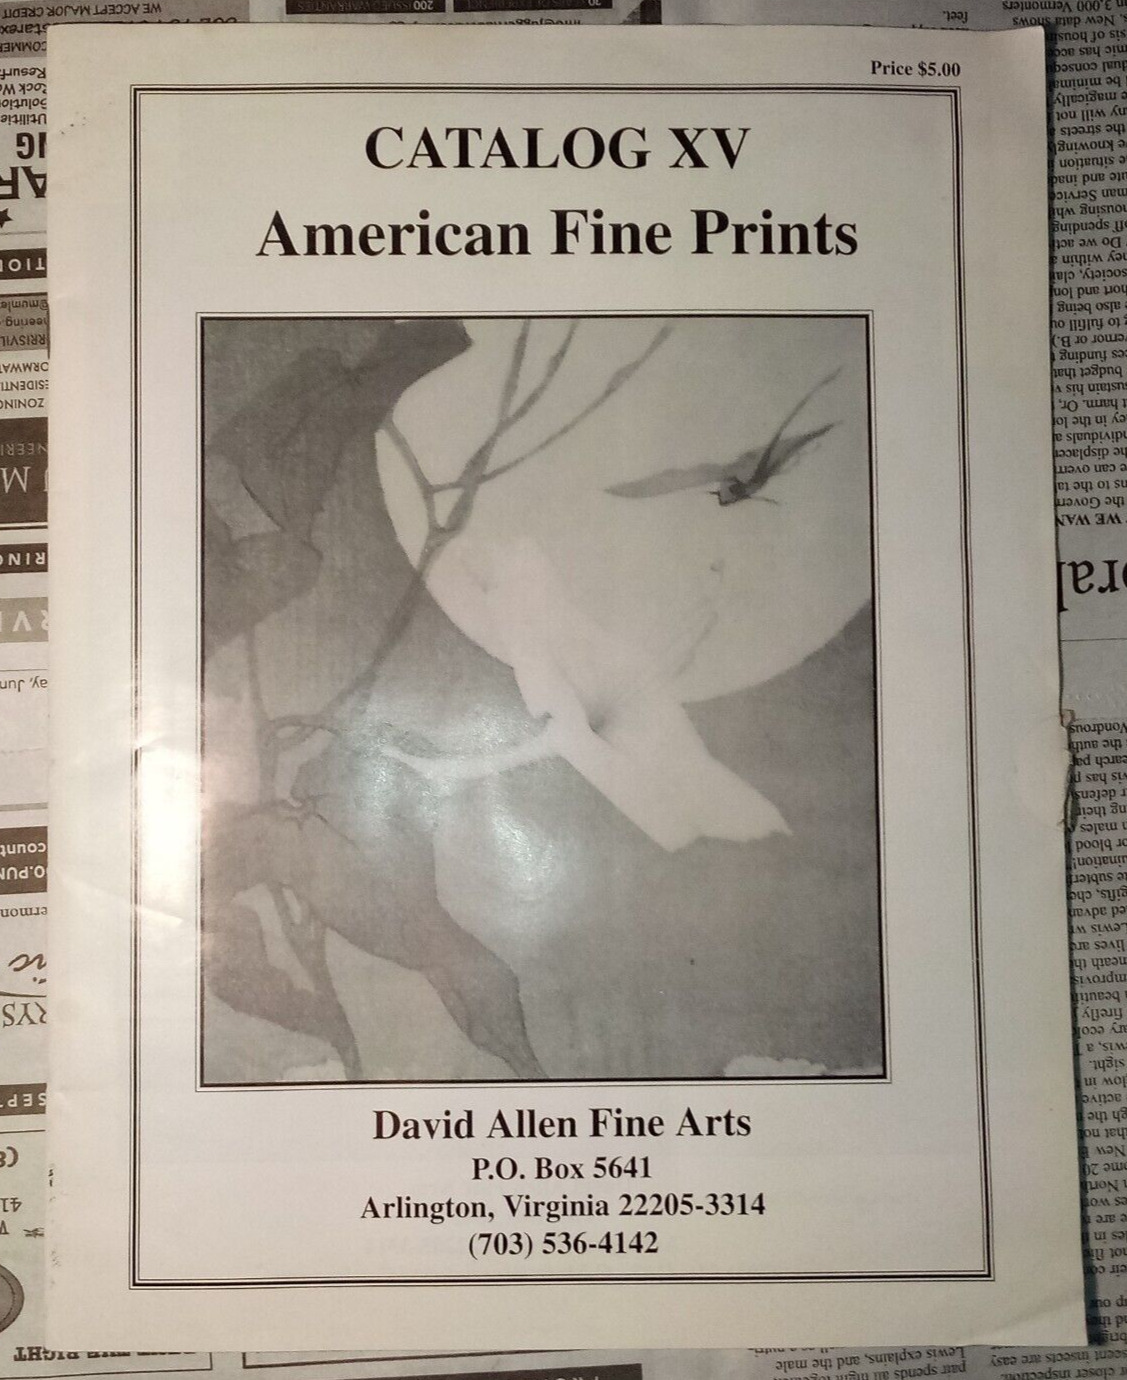 David Allen Fine Arts - American Fine Prints - Catalog XV - Arlington Virginia